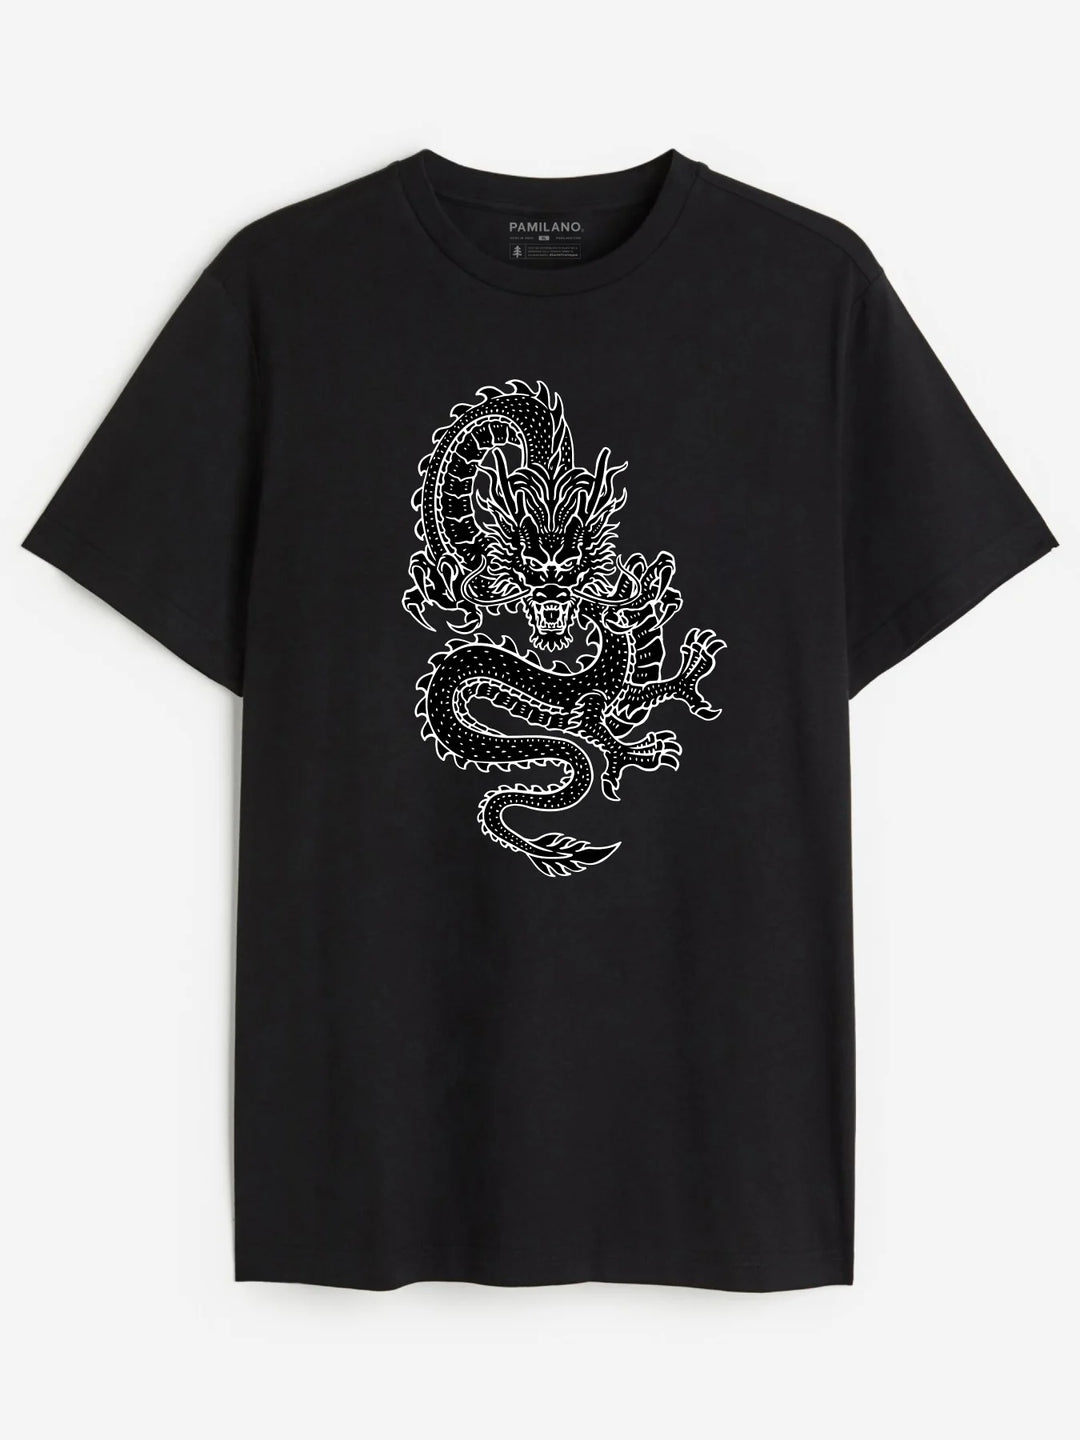 Black Dragon - Unisex T-Shirt